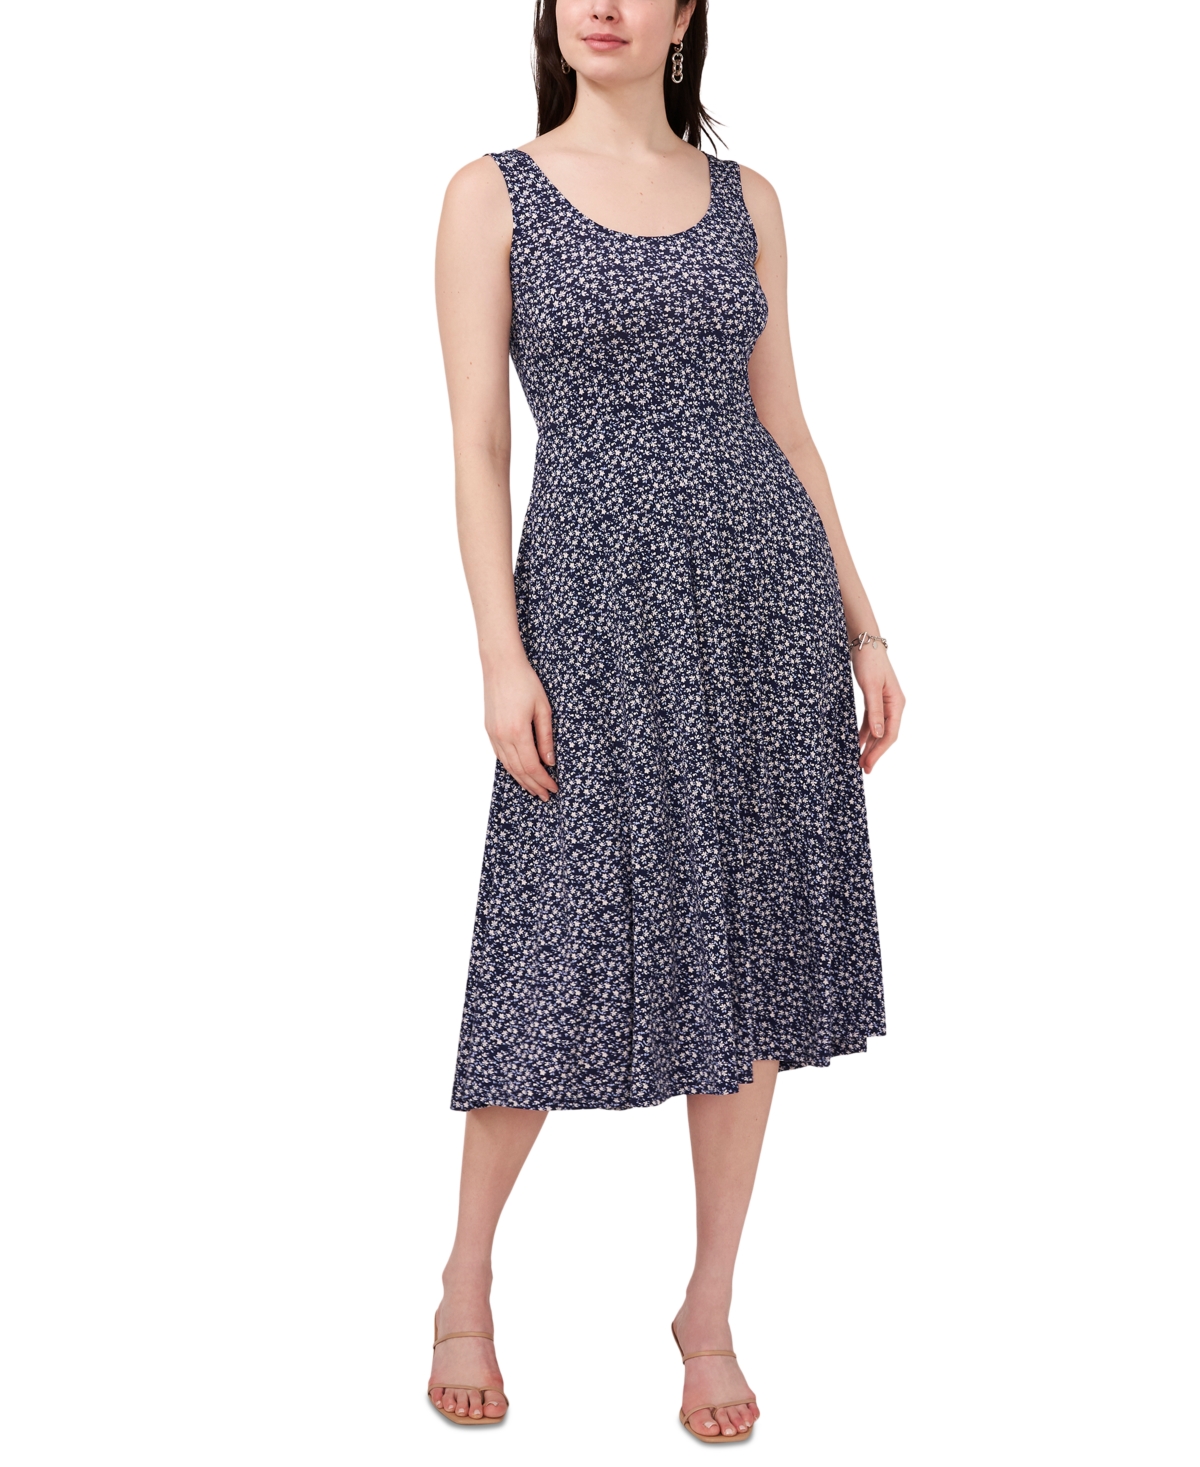 Women's Printed Scoop-Neck Sleeveless Midi Dress - Navy